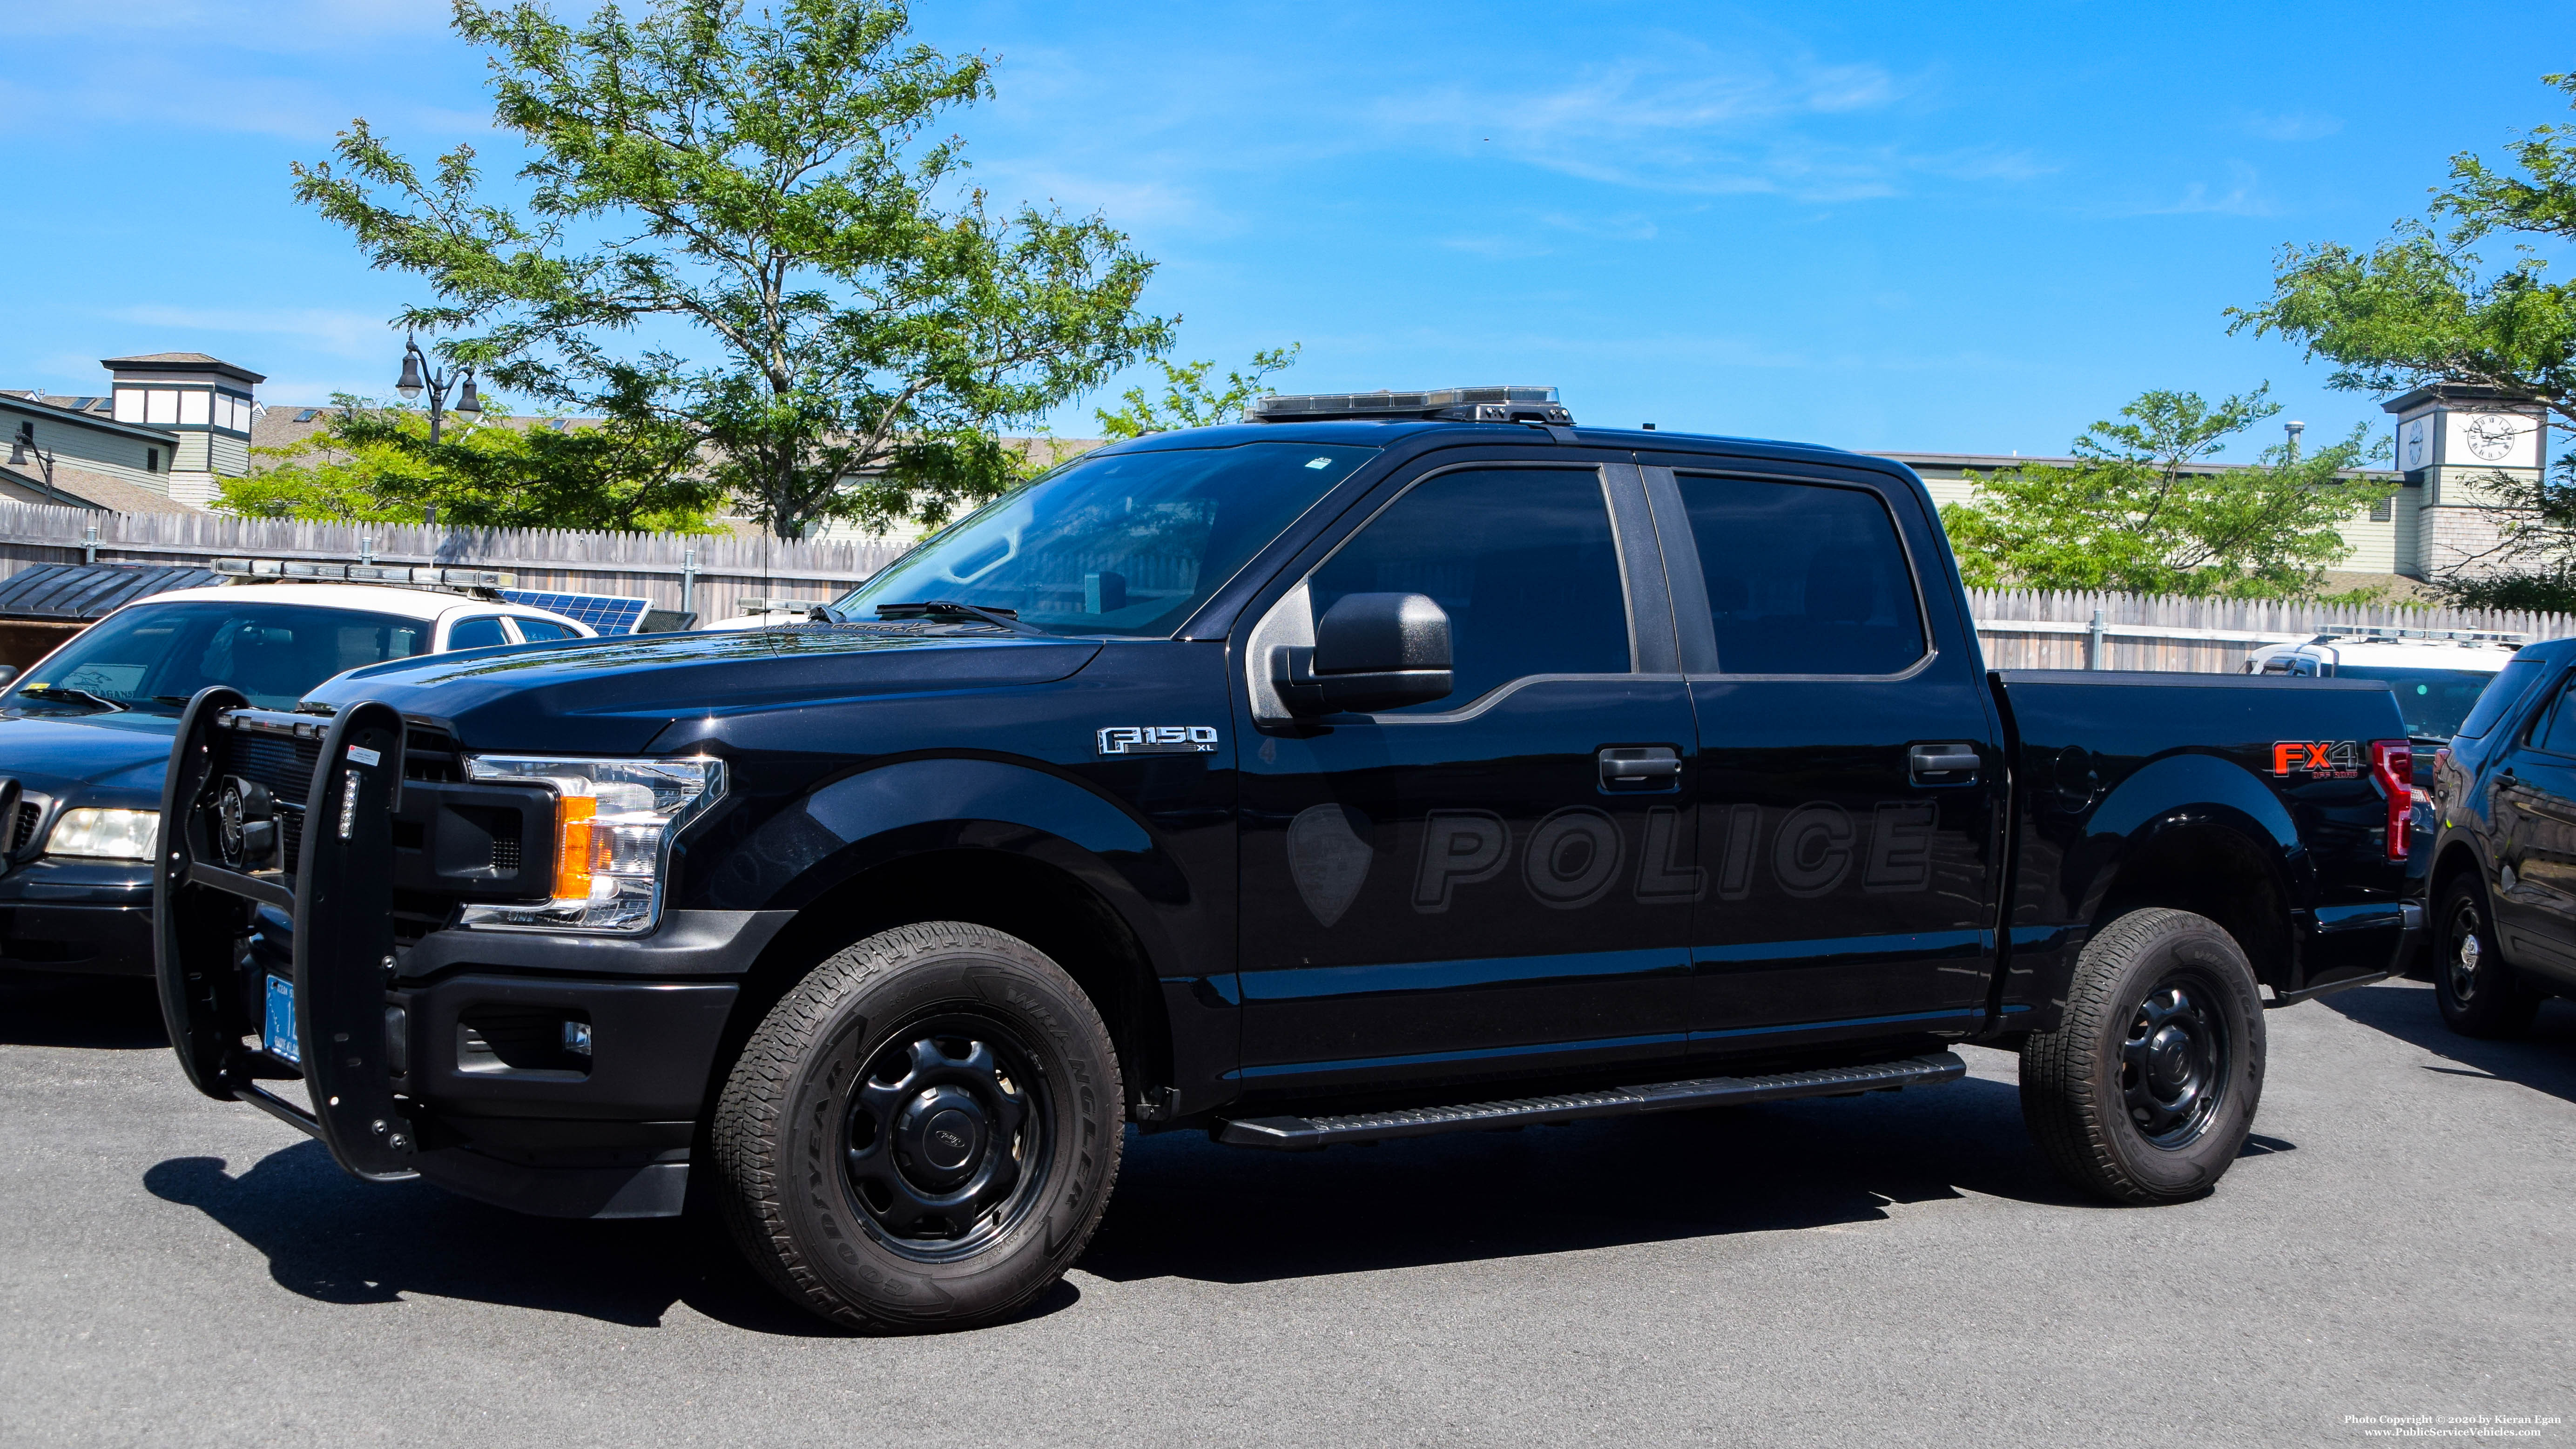 A photo  of Narragansett Police
            Car 4, a 2019 Ford F-150             taken by Kieran Egan